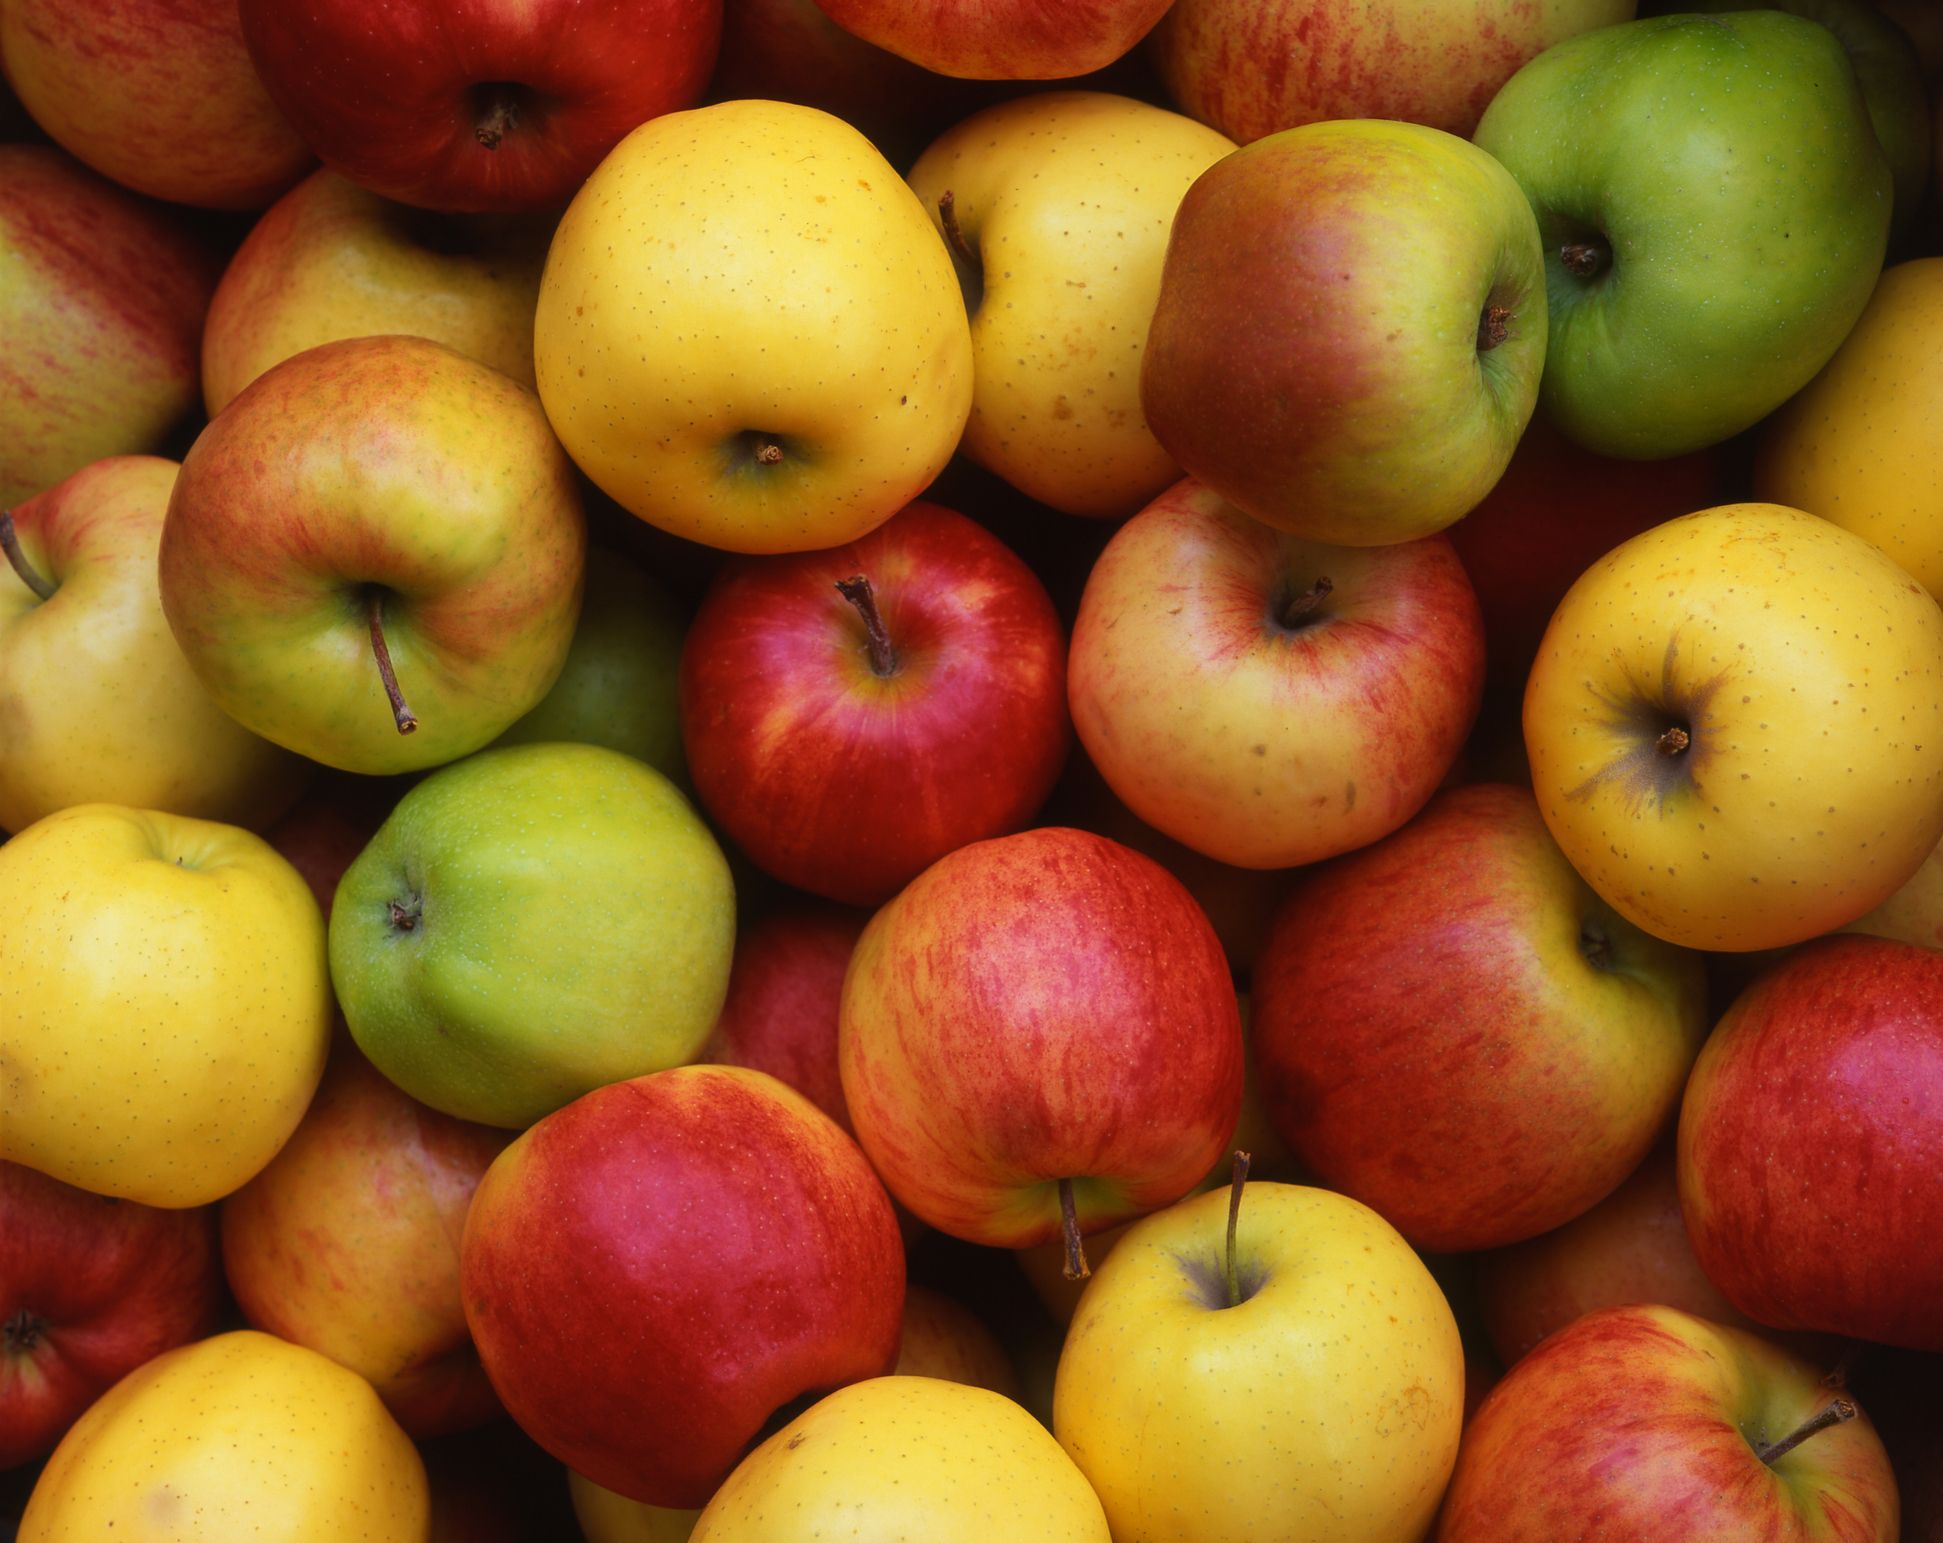 https://hips.hearstapps.com/hmg-prod/images/apples-at-farmers-market-royalty-free-image-1627321463.jpg